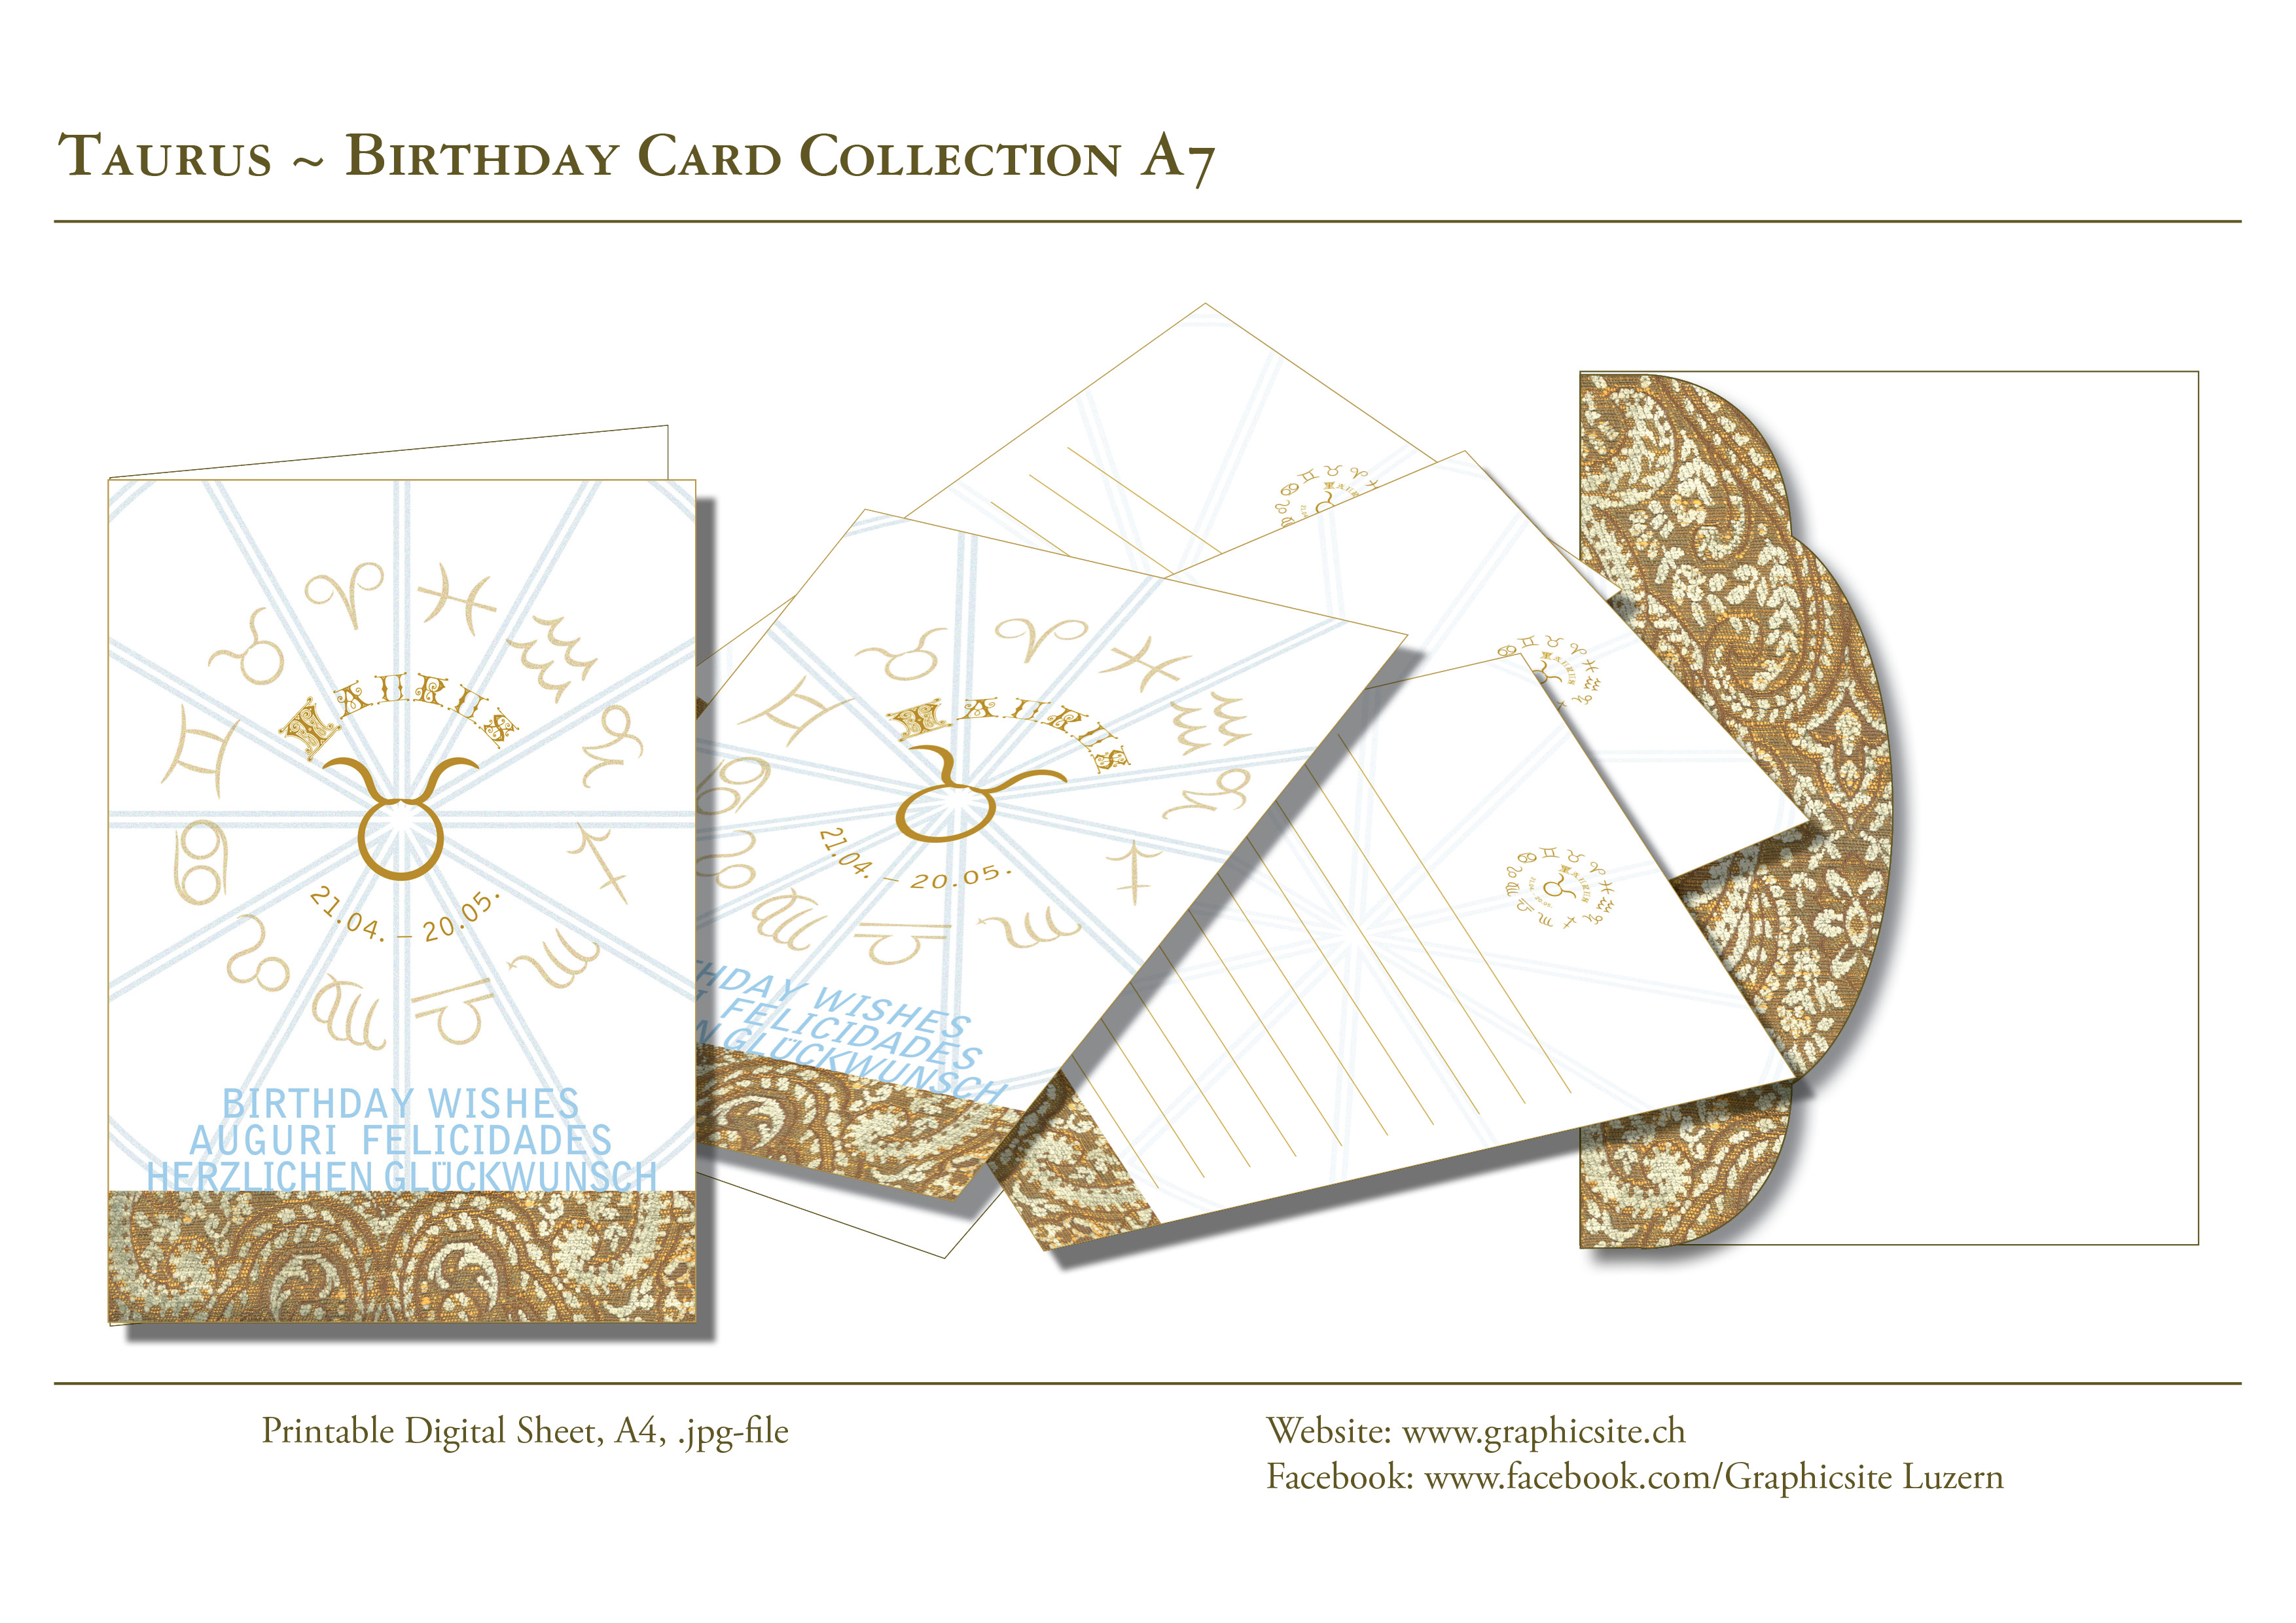 Printable Digital Sheets - Birthday Card Collection - Horoscope - Zodiac - Taurus A7 - GraphicDesign, Luzern